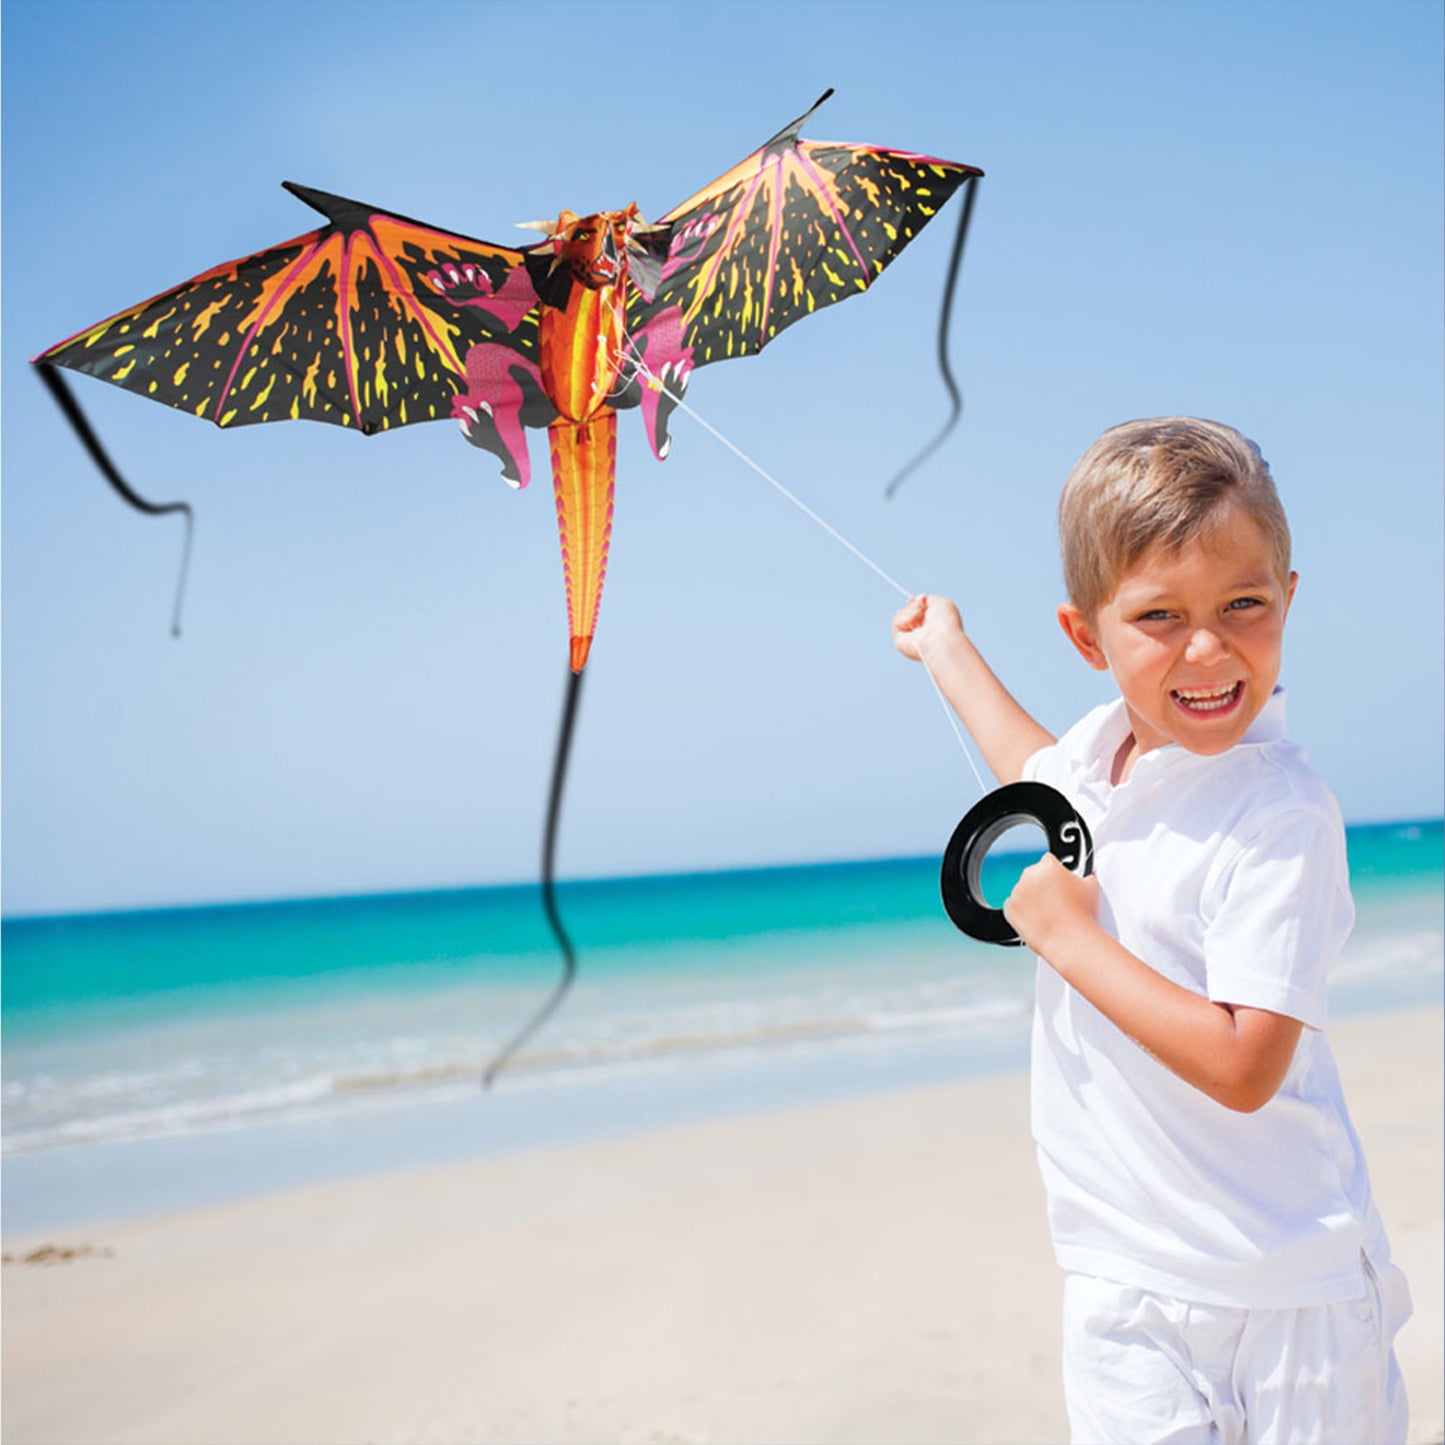 boy flying 3d dragon kite at the beach